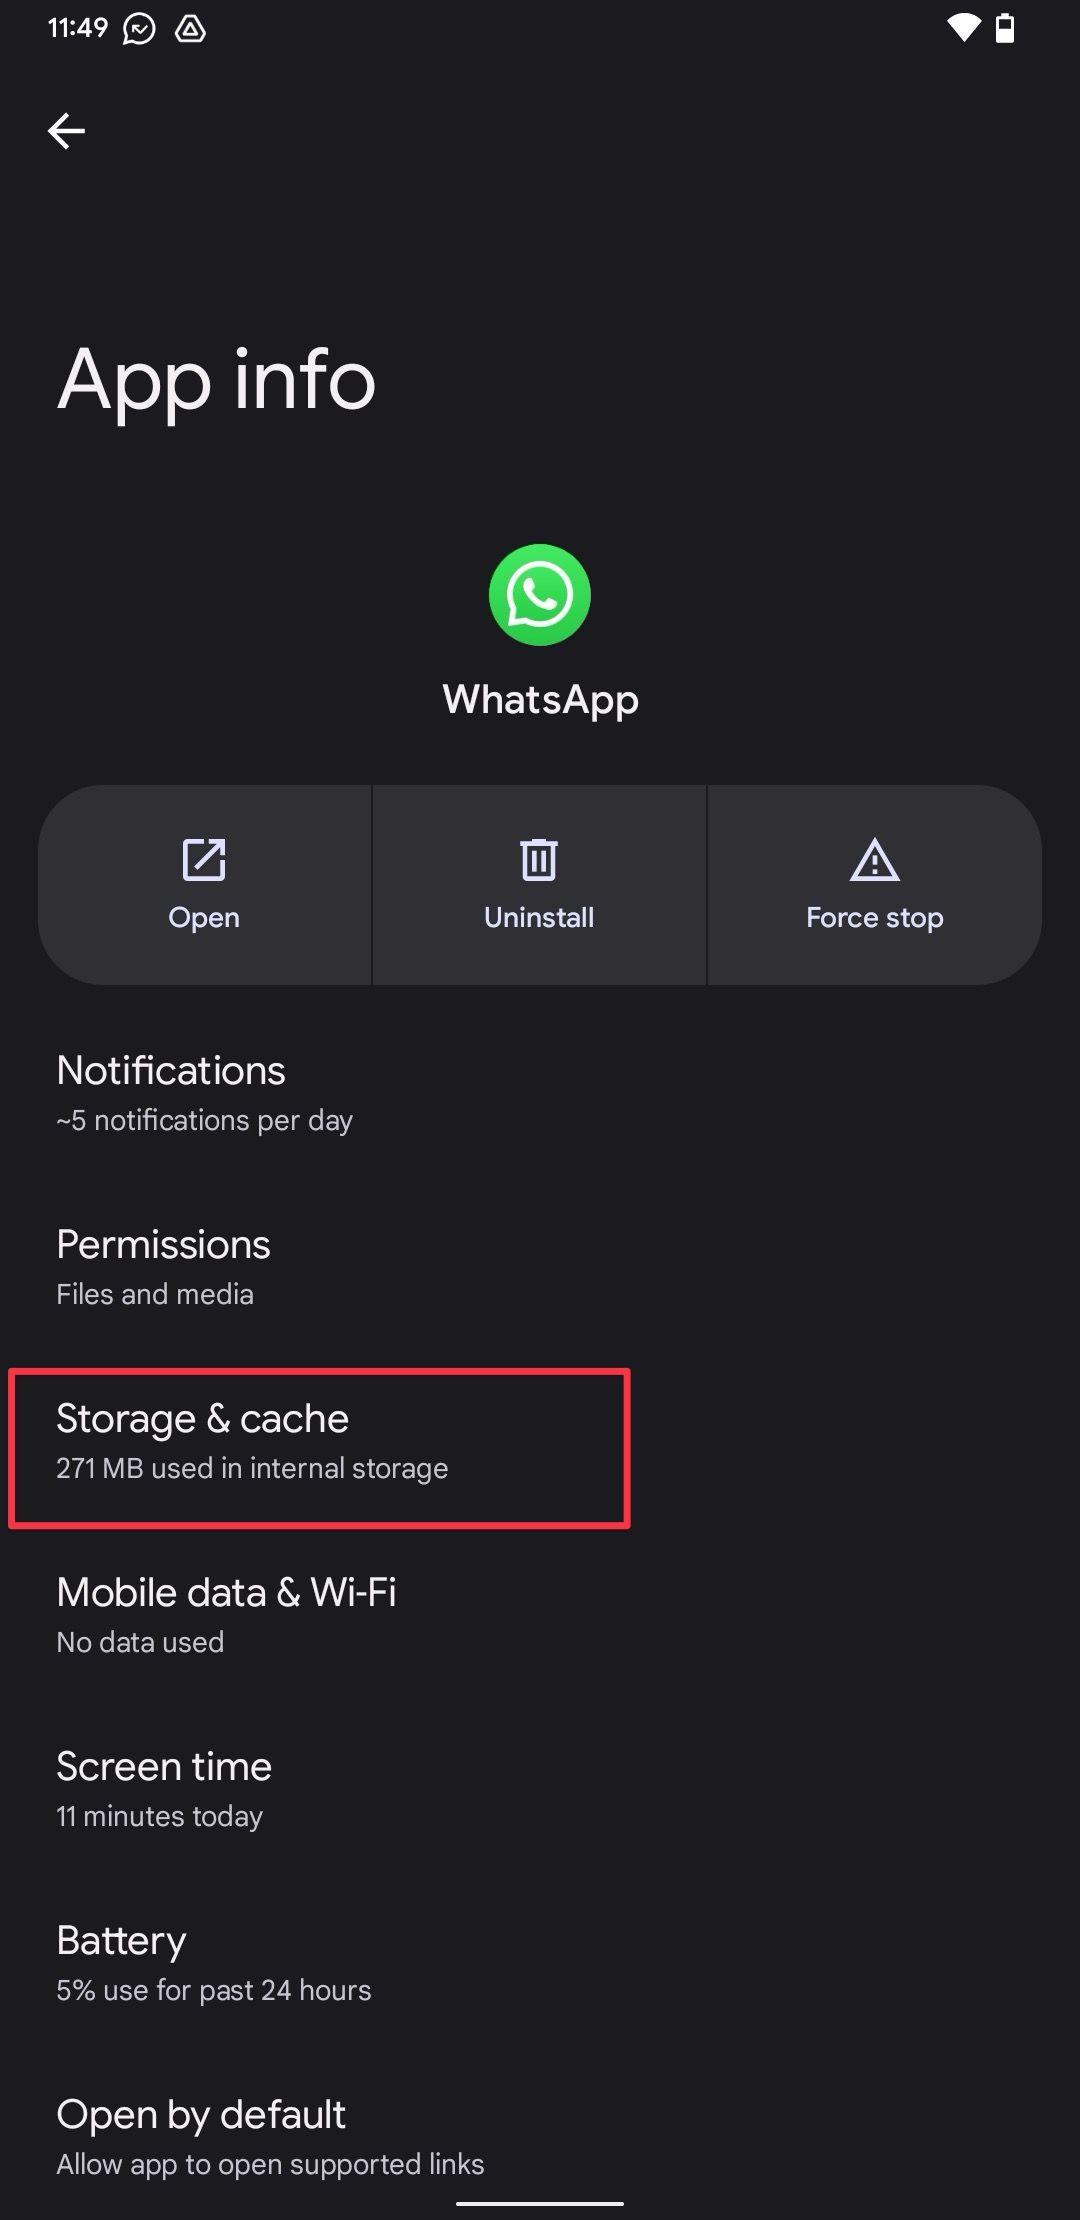 WhatsApp App Info page screenshot showing Storage & cache option